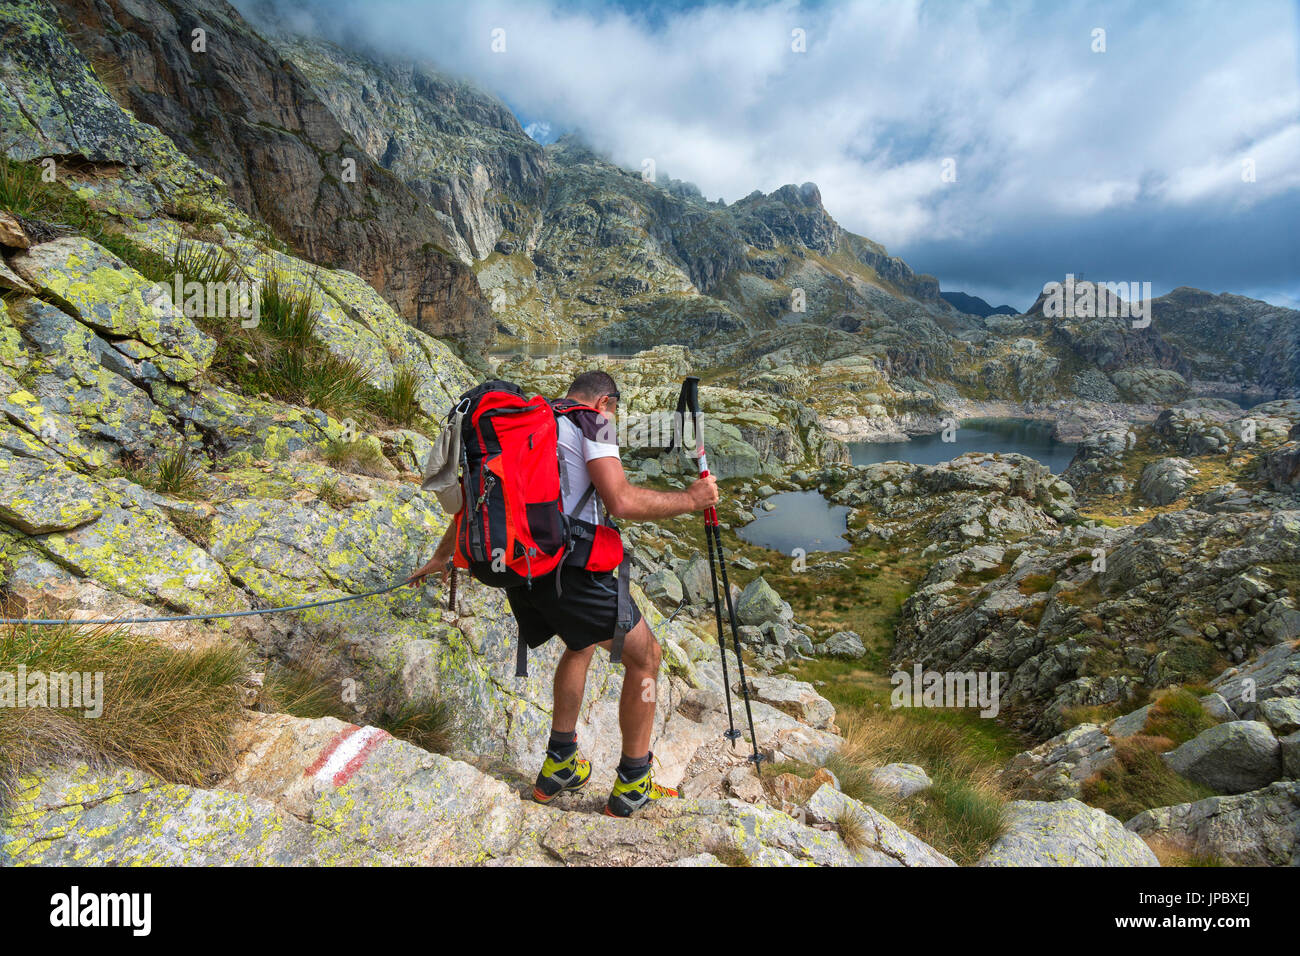 Trekking in the Alps Orobie, Valgoglio, province of Bergamo, Italy. Stock Photo